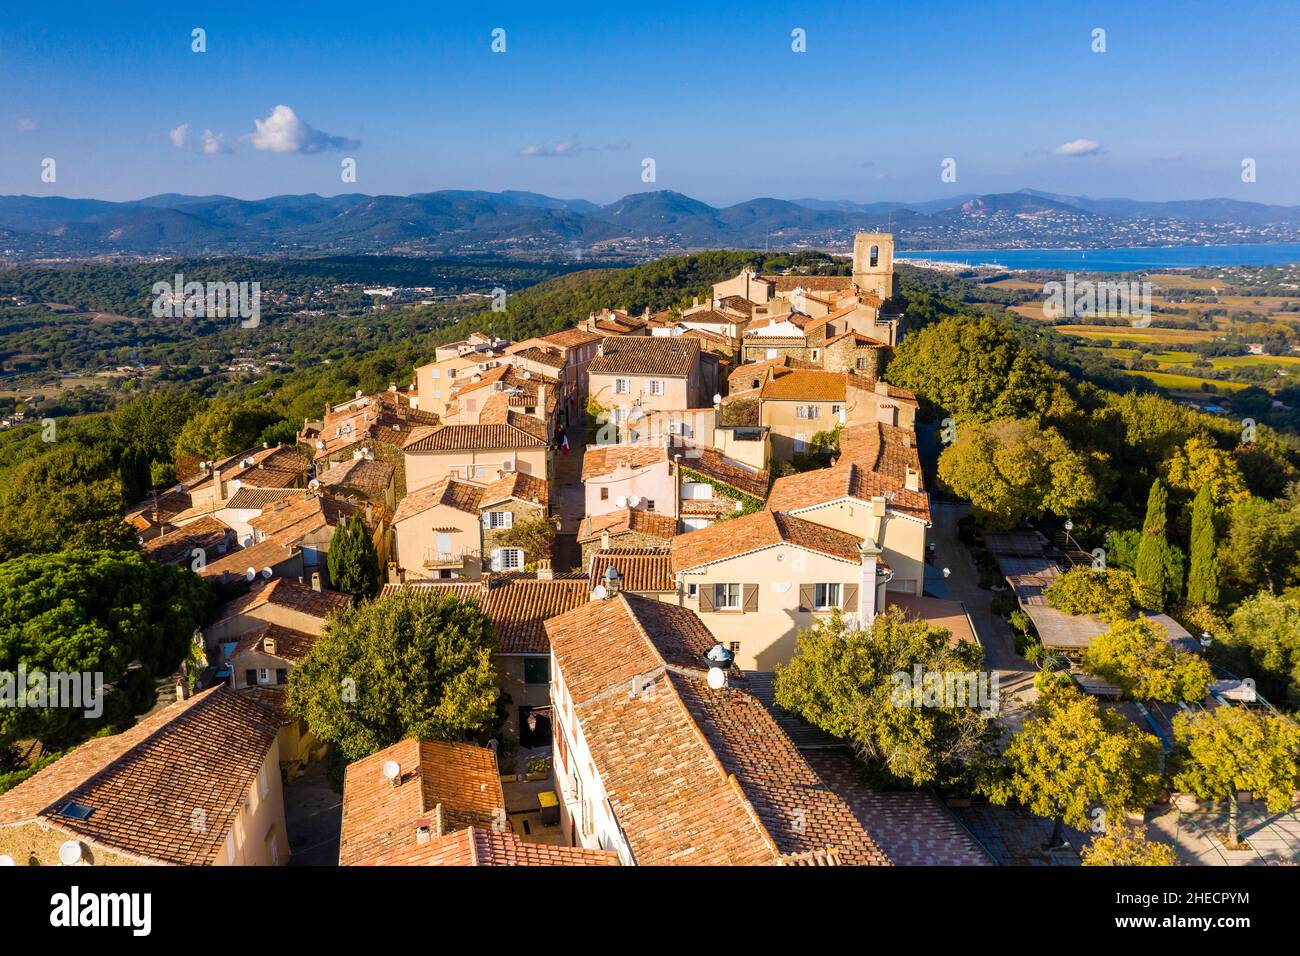 France, Var, Gulf of Saint Tropez, Gassin, labelled Les Plus Beaux Villages de France (The Most Beautiful Villages of France), general view of the vil Stock Photo